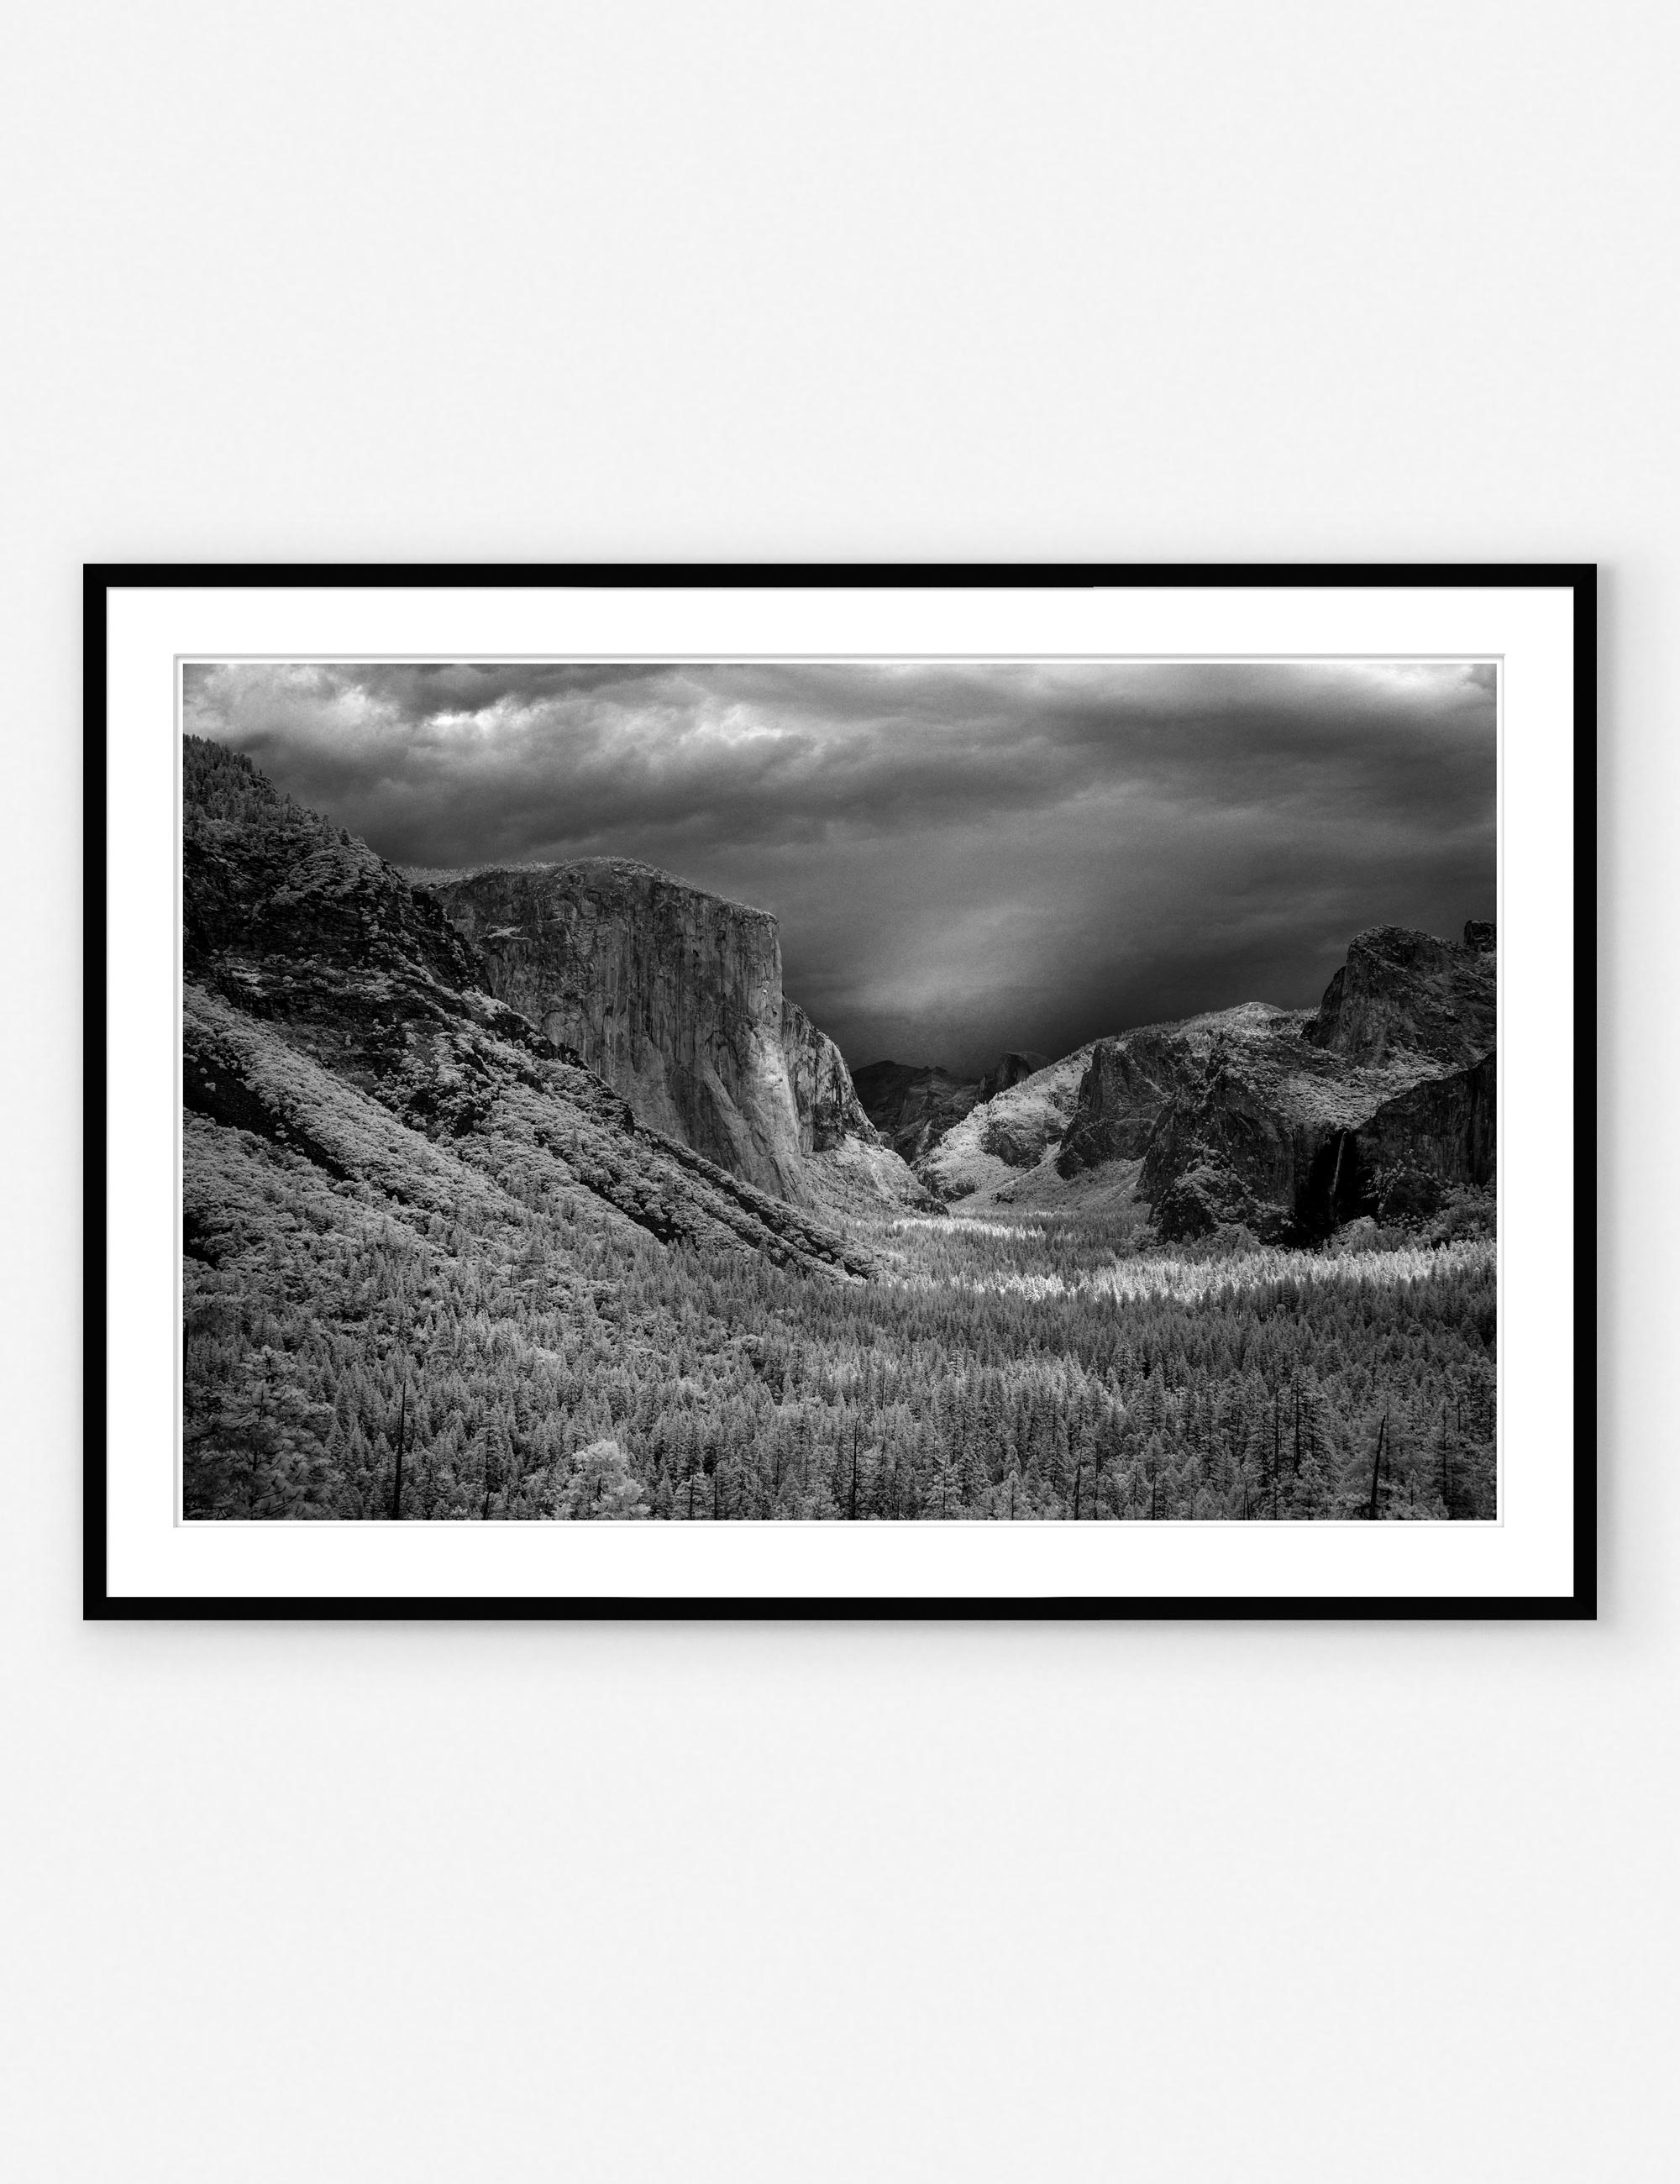 'Yosemite National Park' Photography Print - Image 0